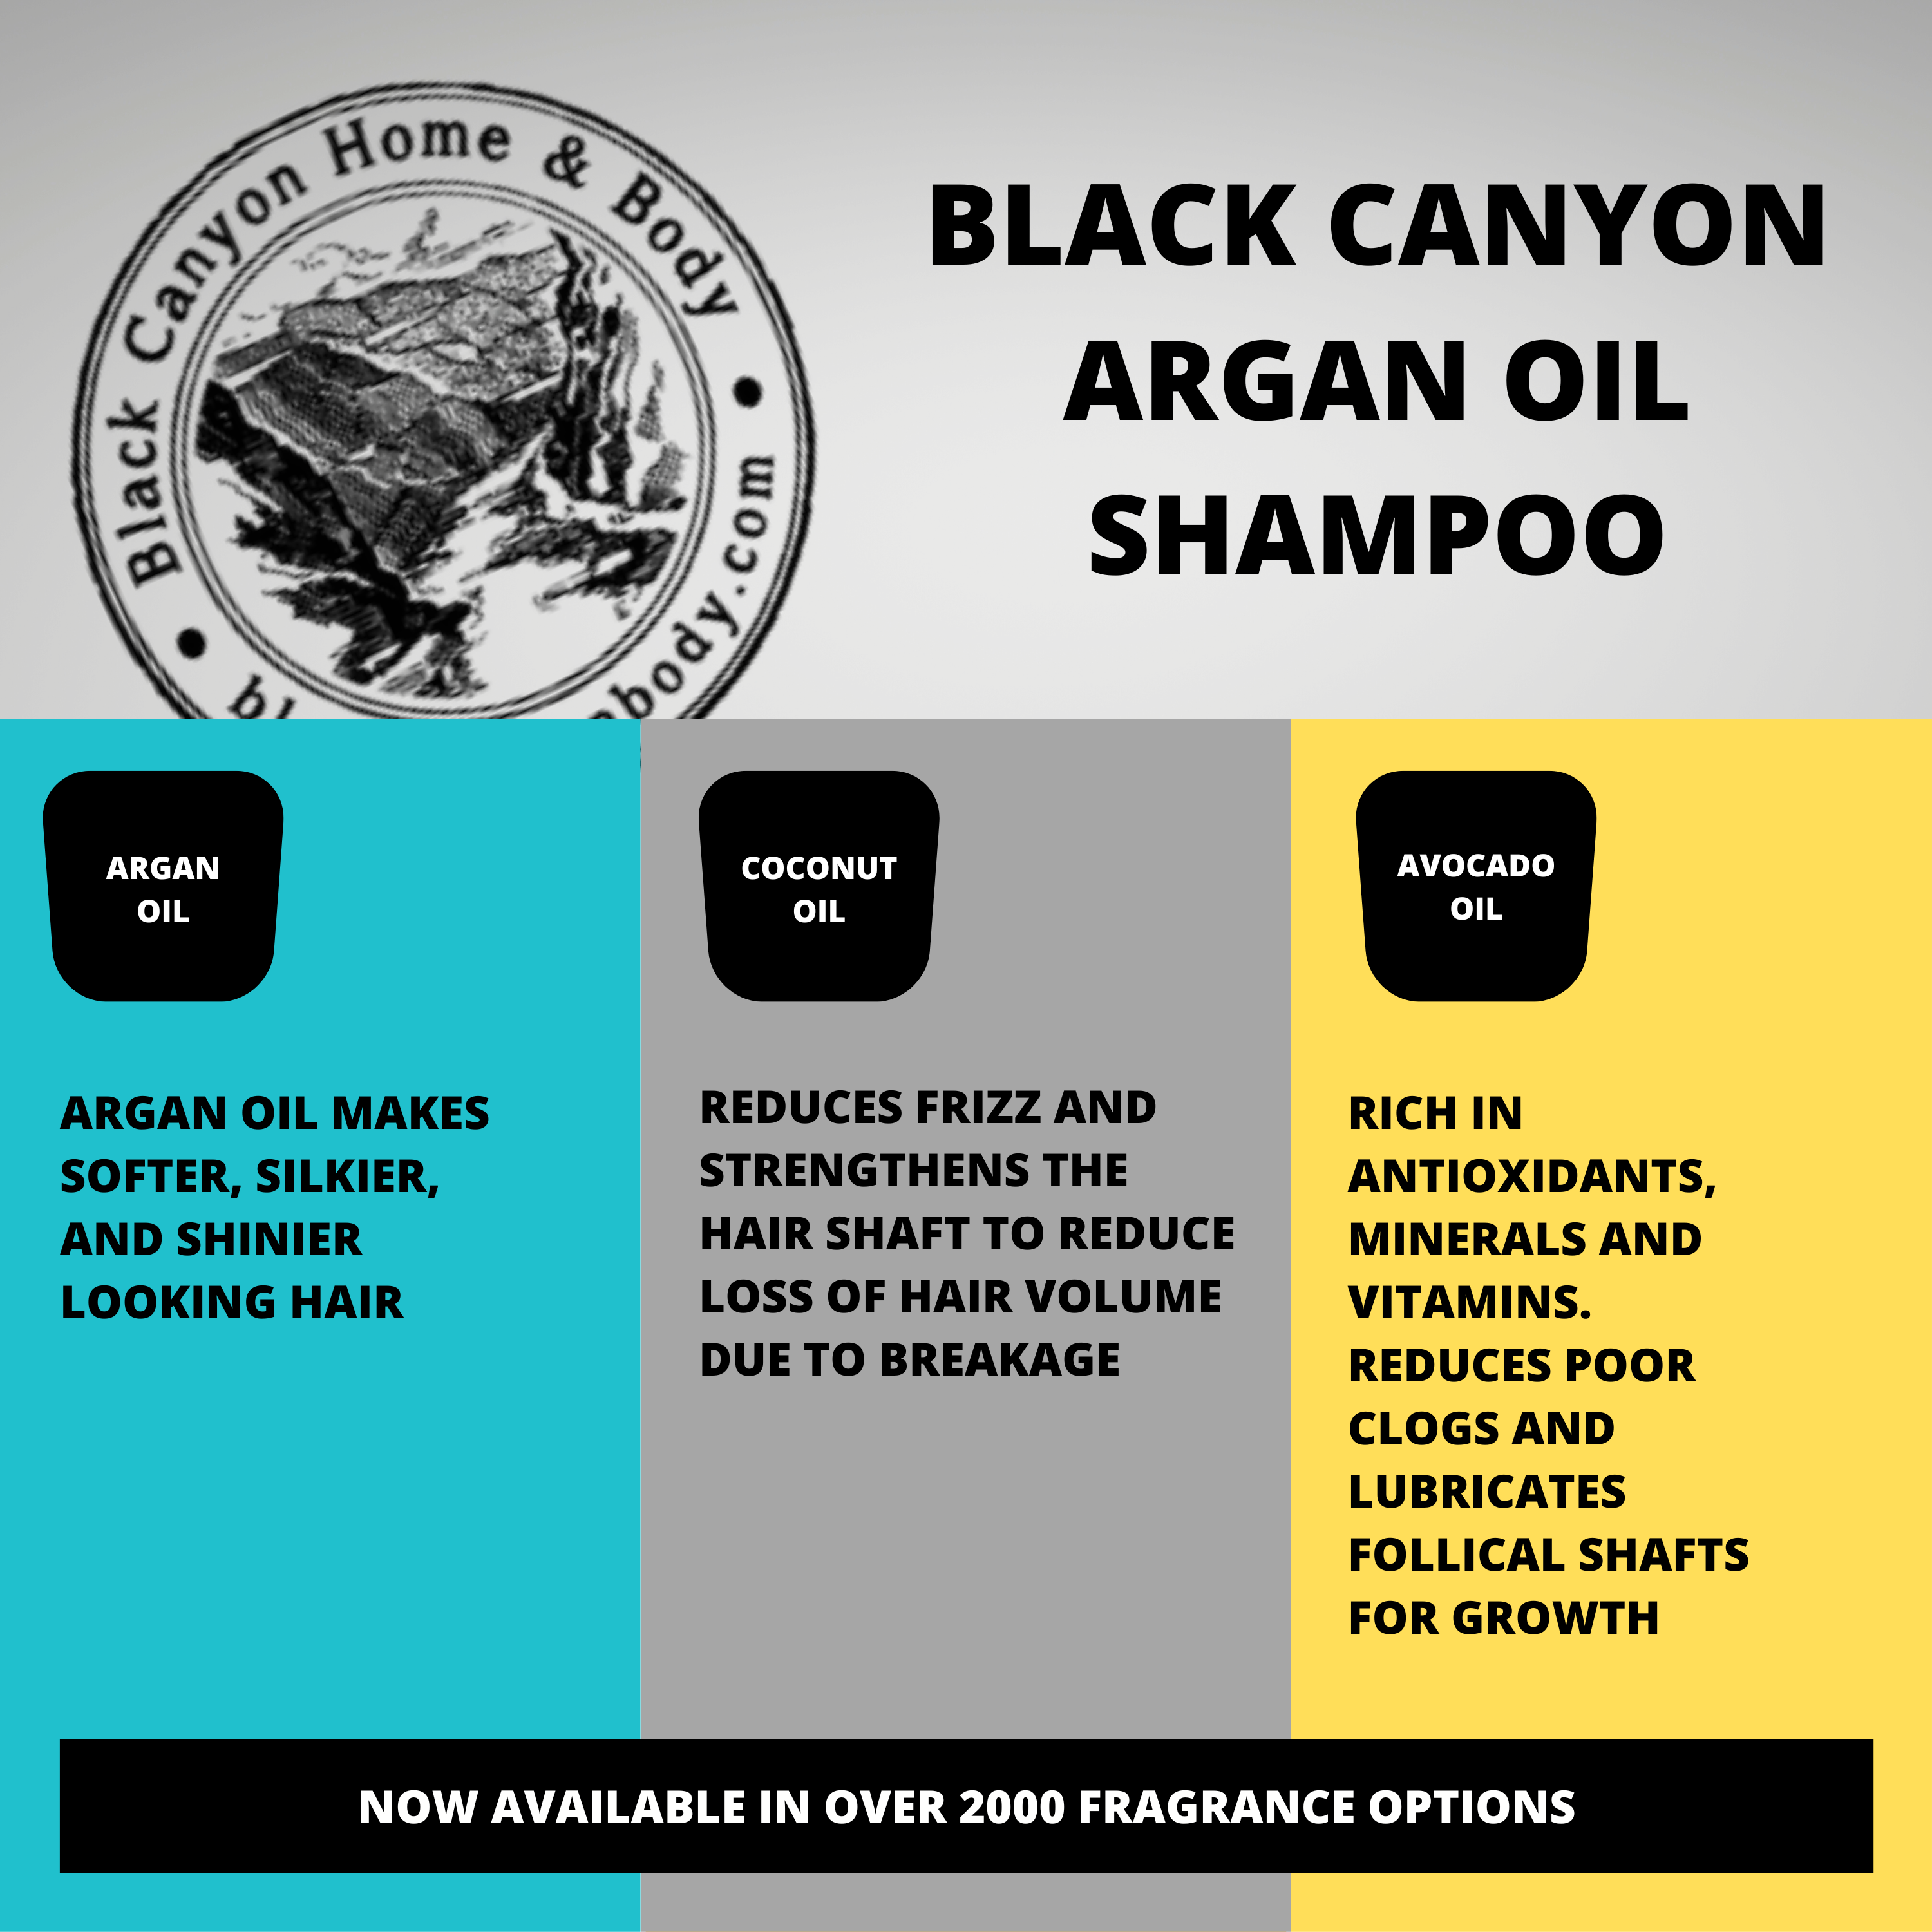 Black Canyon Lemon & Lime Zest Scented Shampoo with Argan Oil